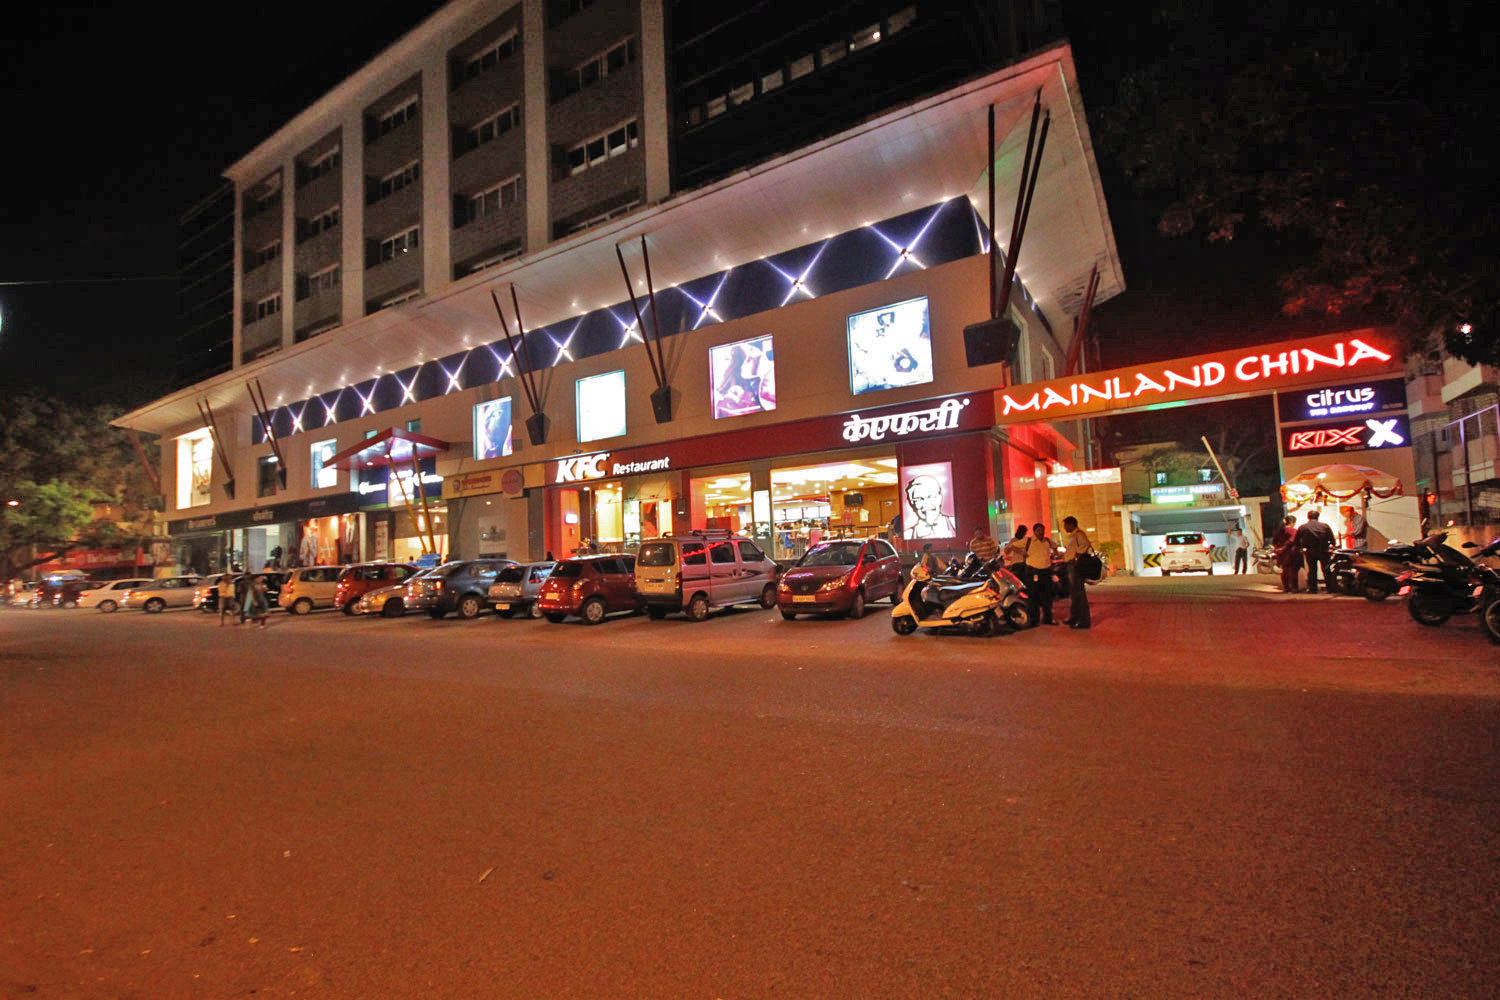 Caculo Mall